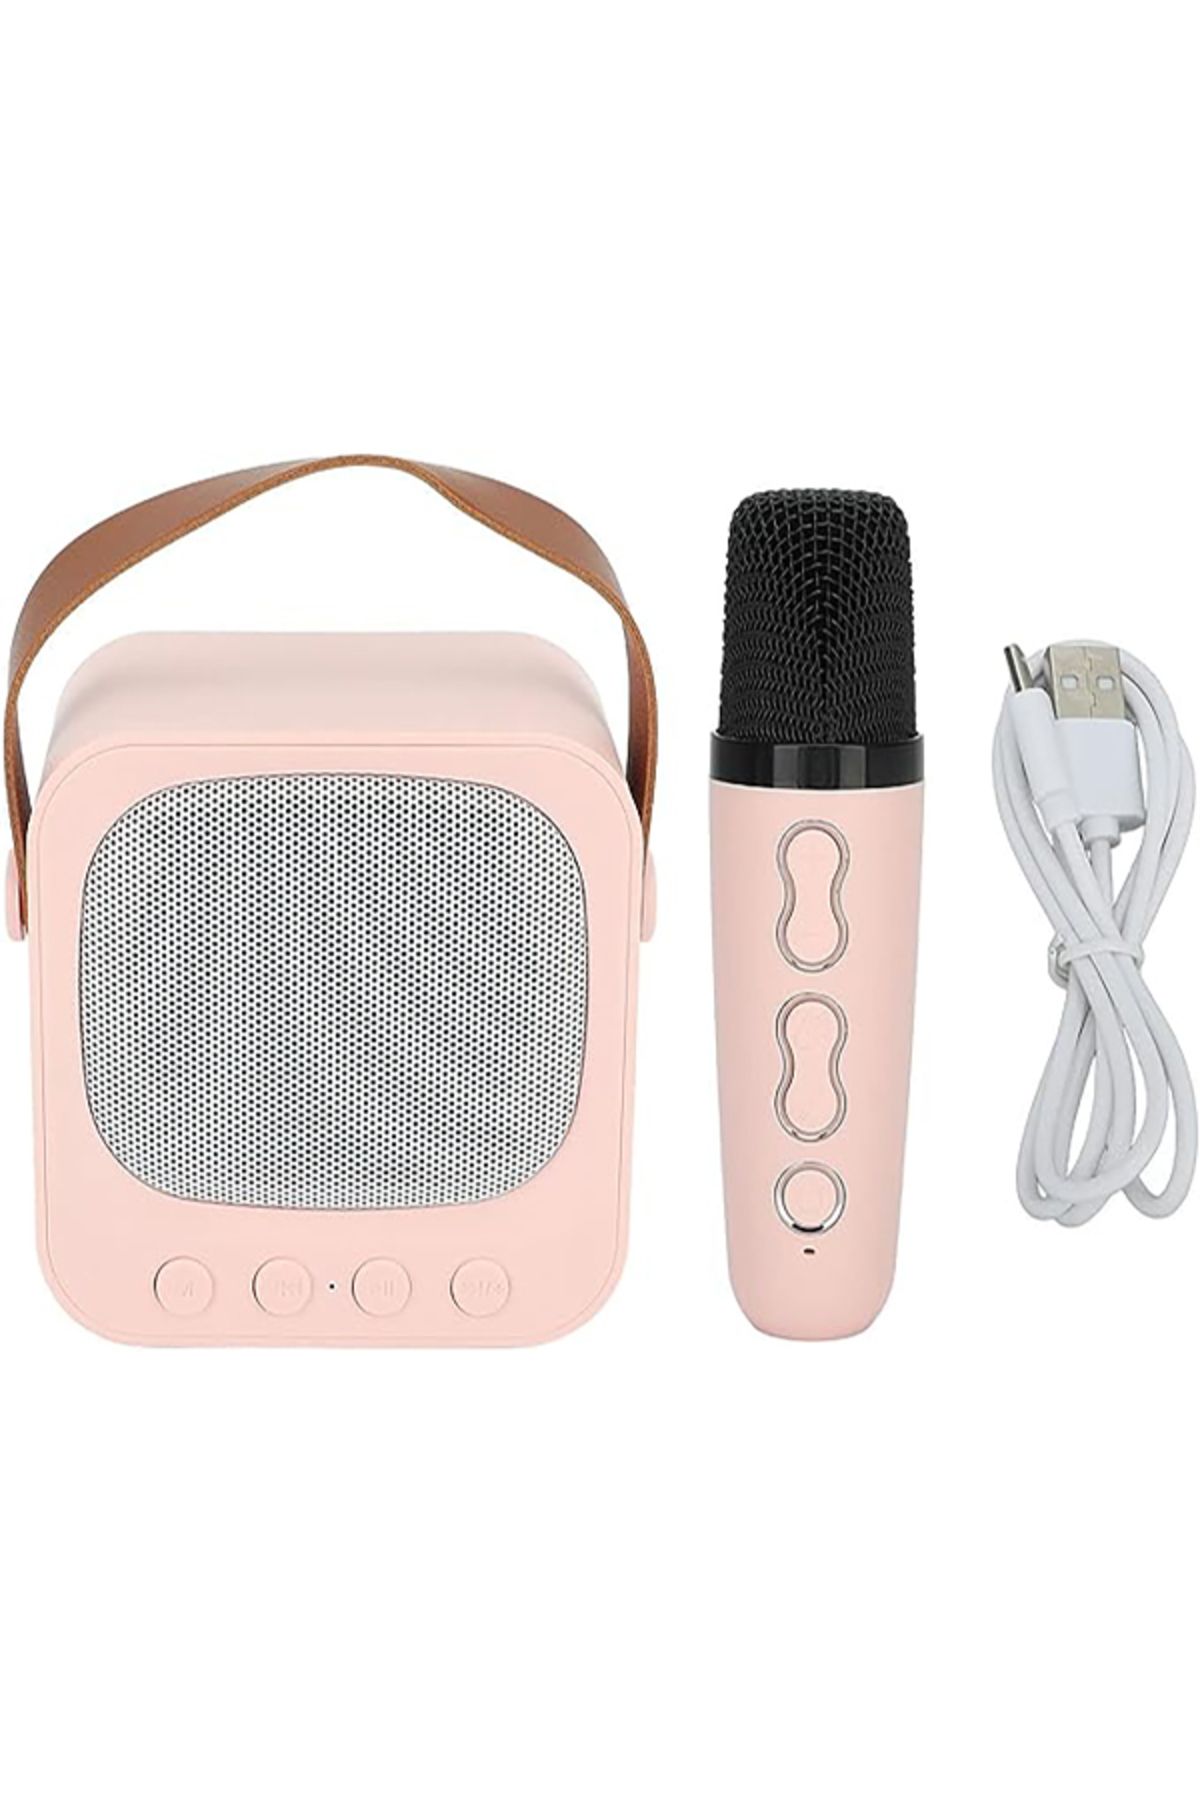 MetaWorld Karaoke Bluetooth Speaker Hoparlör Mikrofonlu